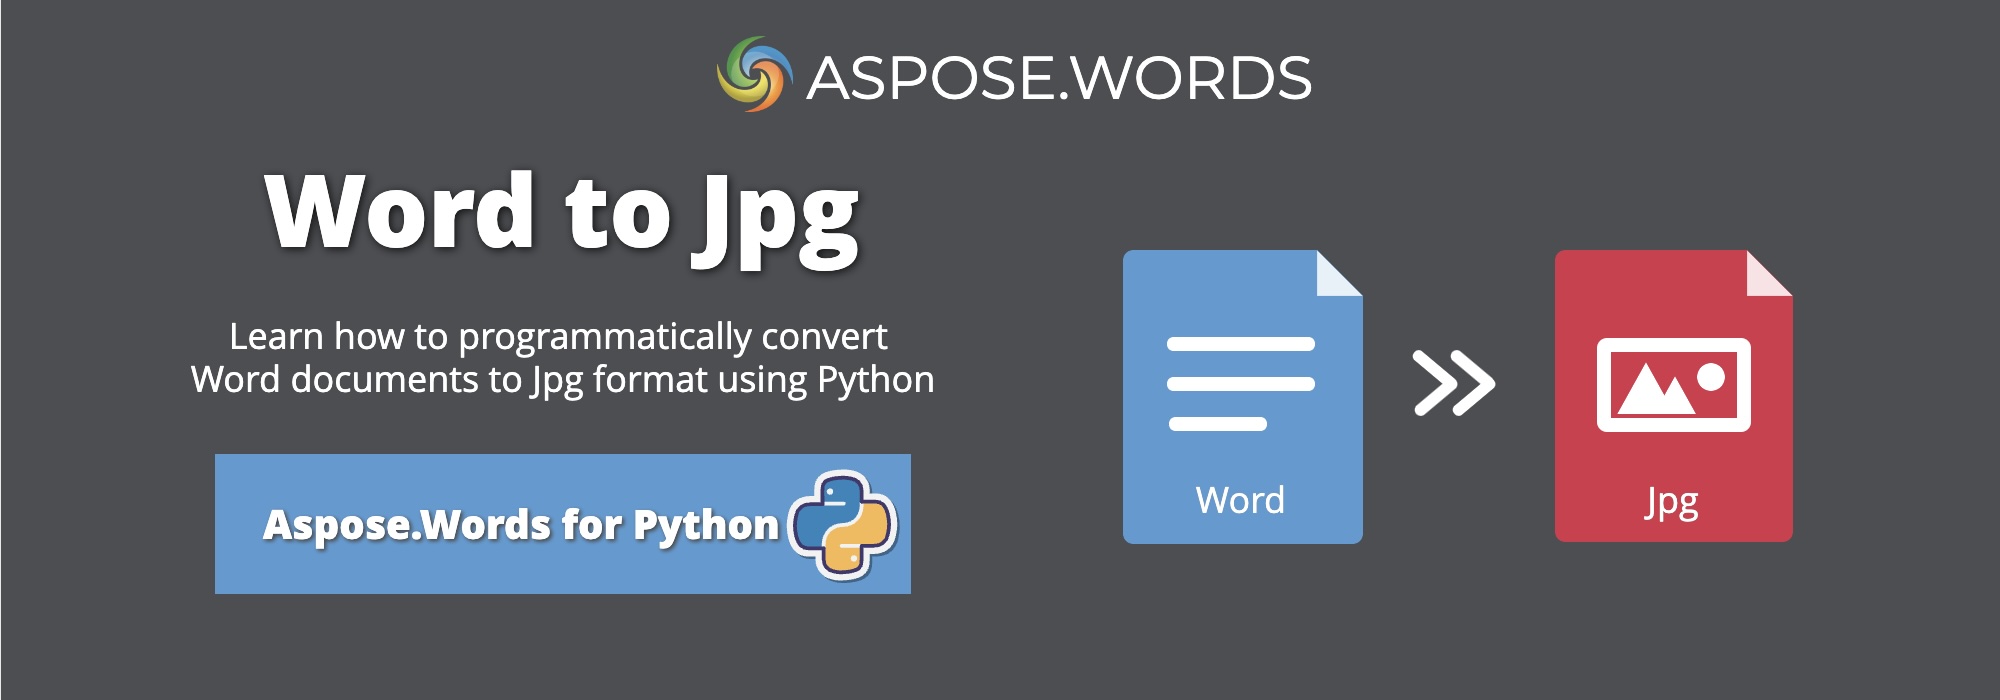 Convert Word to JPG Python | Convert DOCX to JPG Python